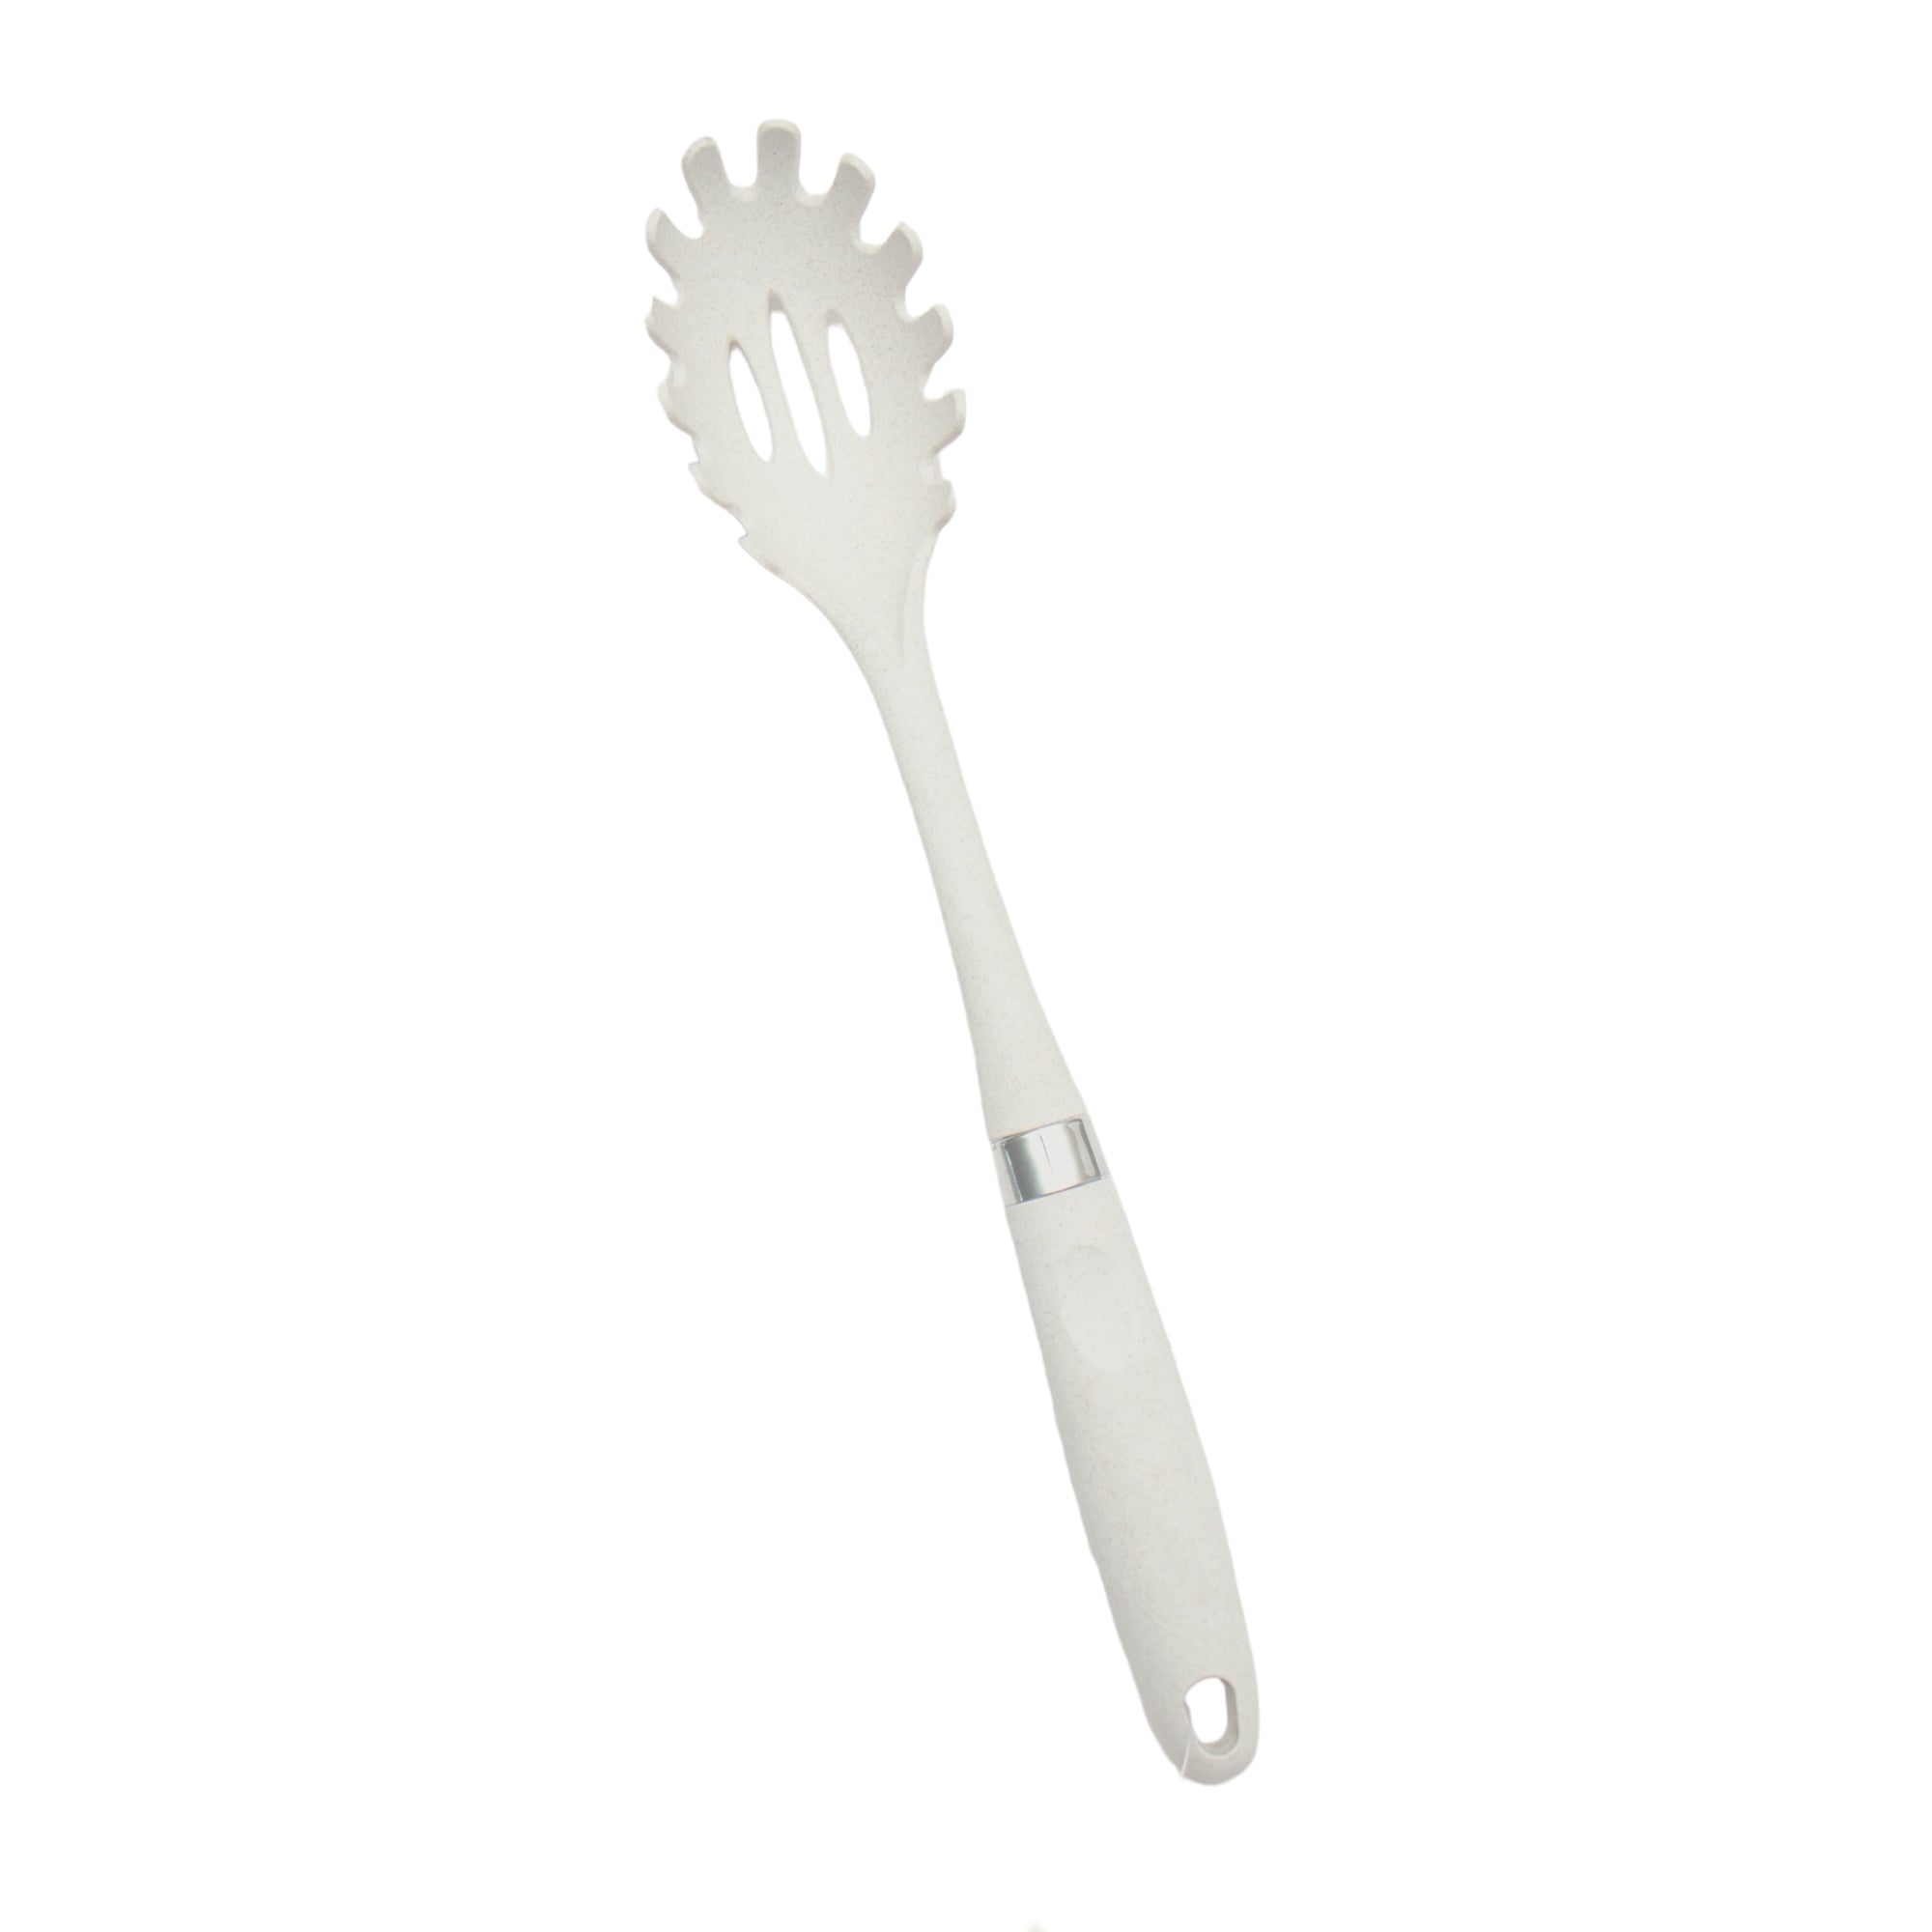 Nylon Serving Pasta Spoon Cream Silica Gel Tableware